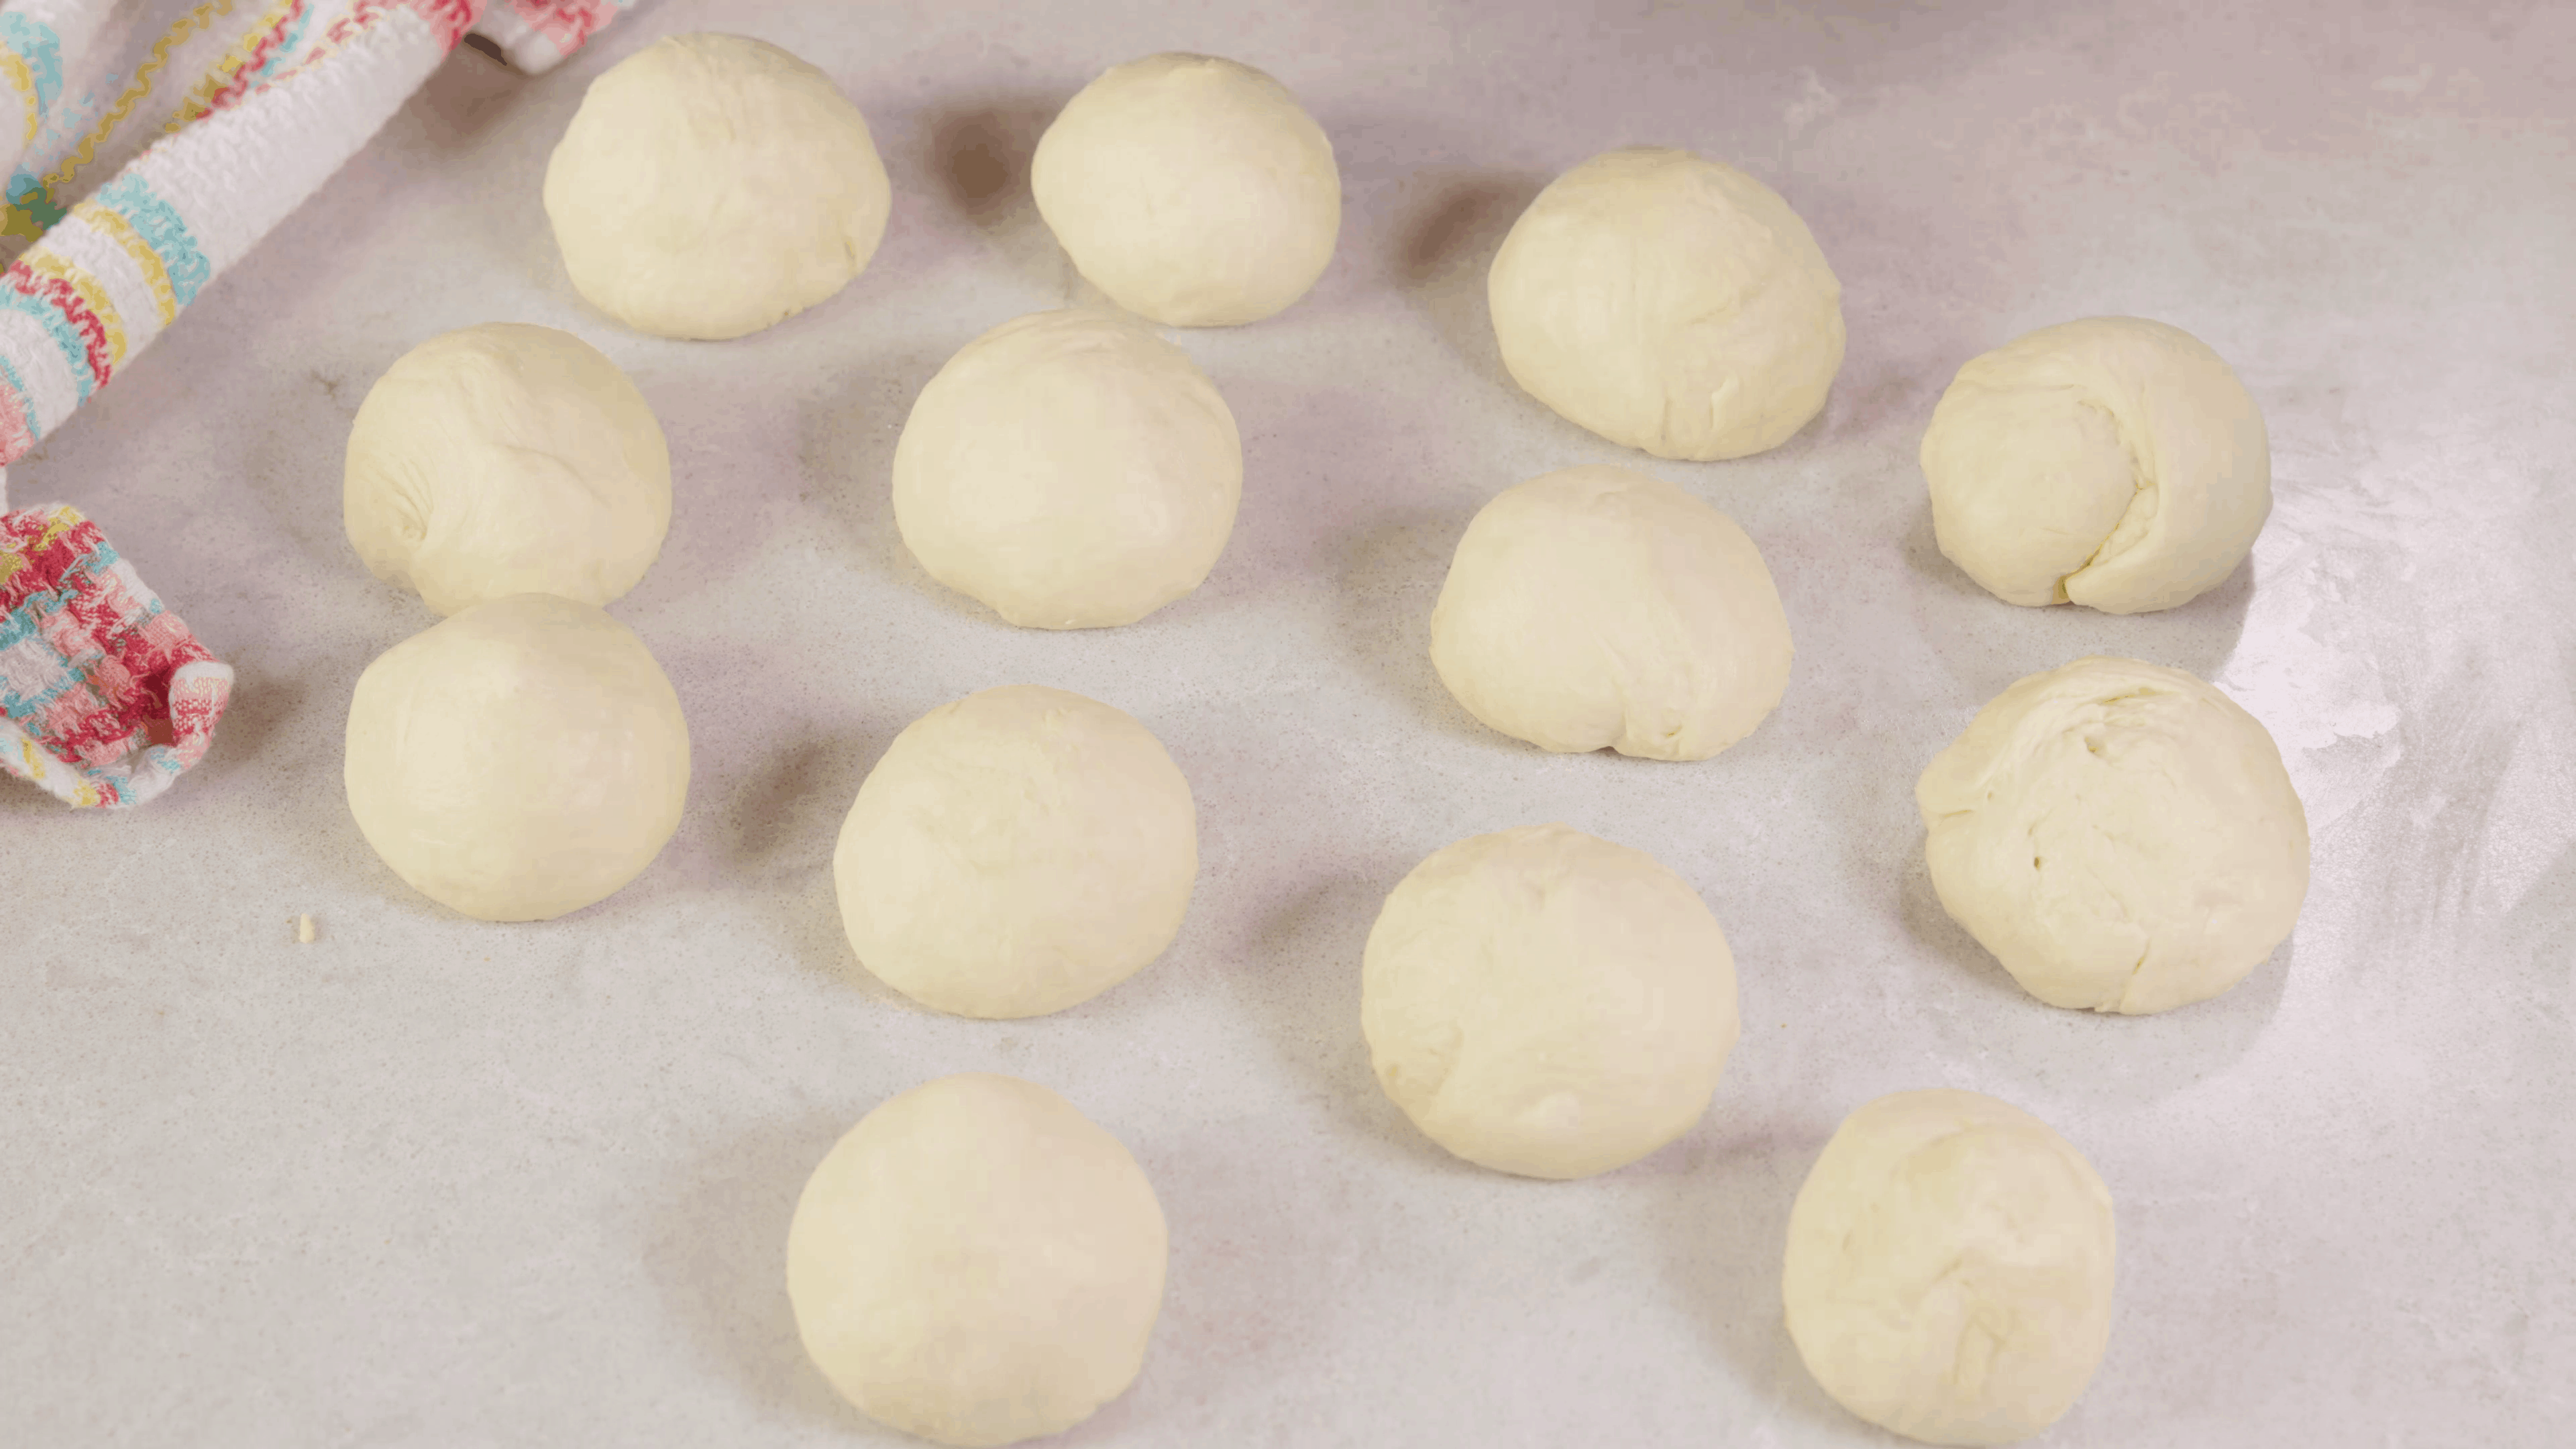 Shaped pita dough balls